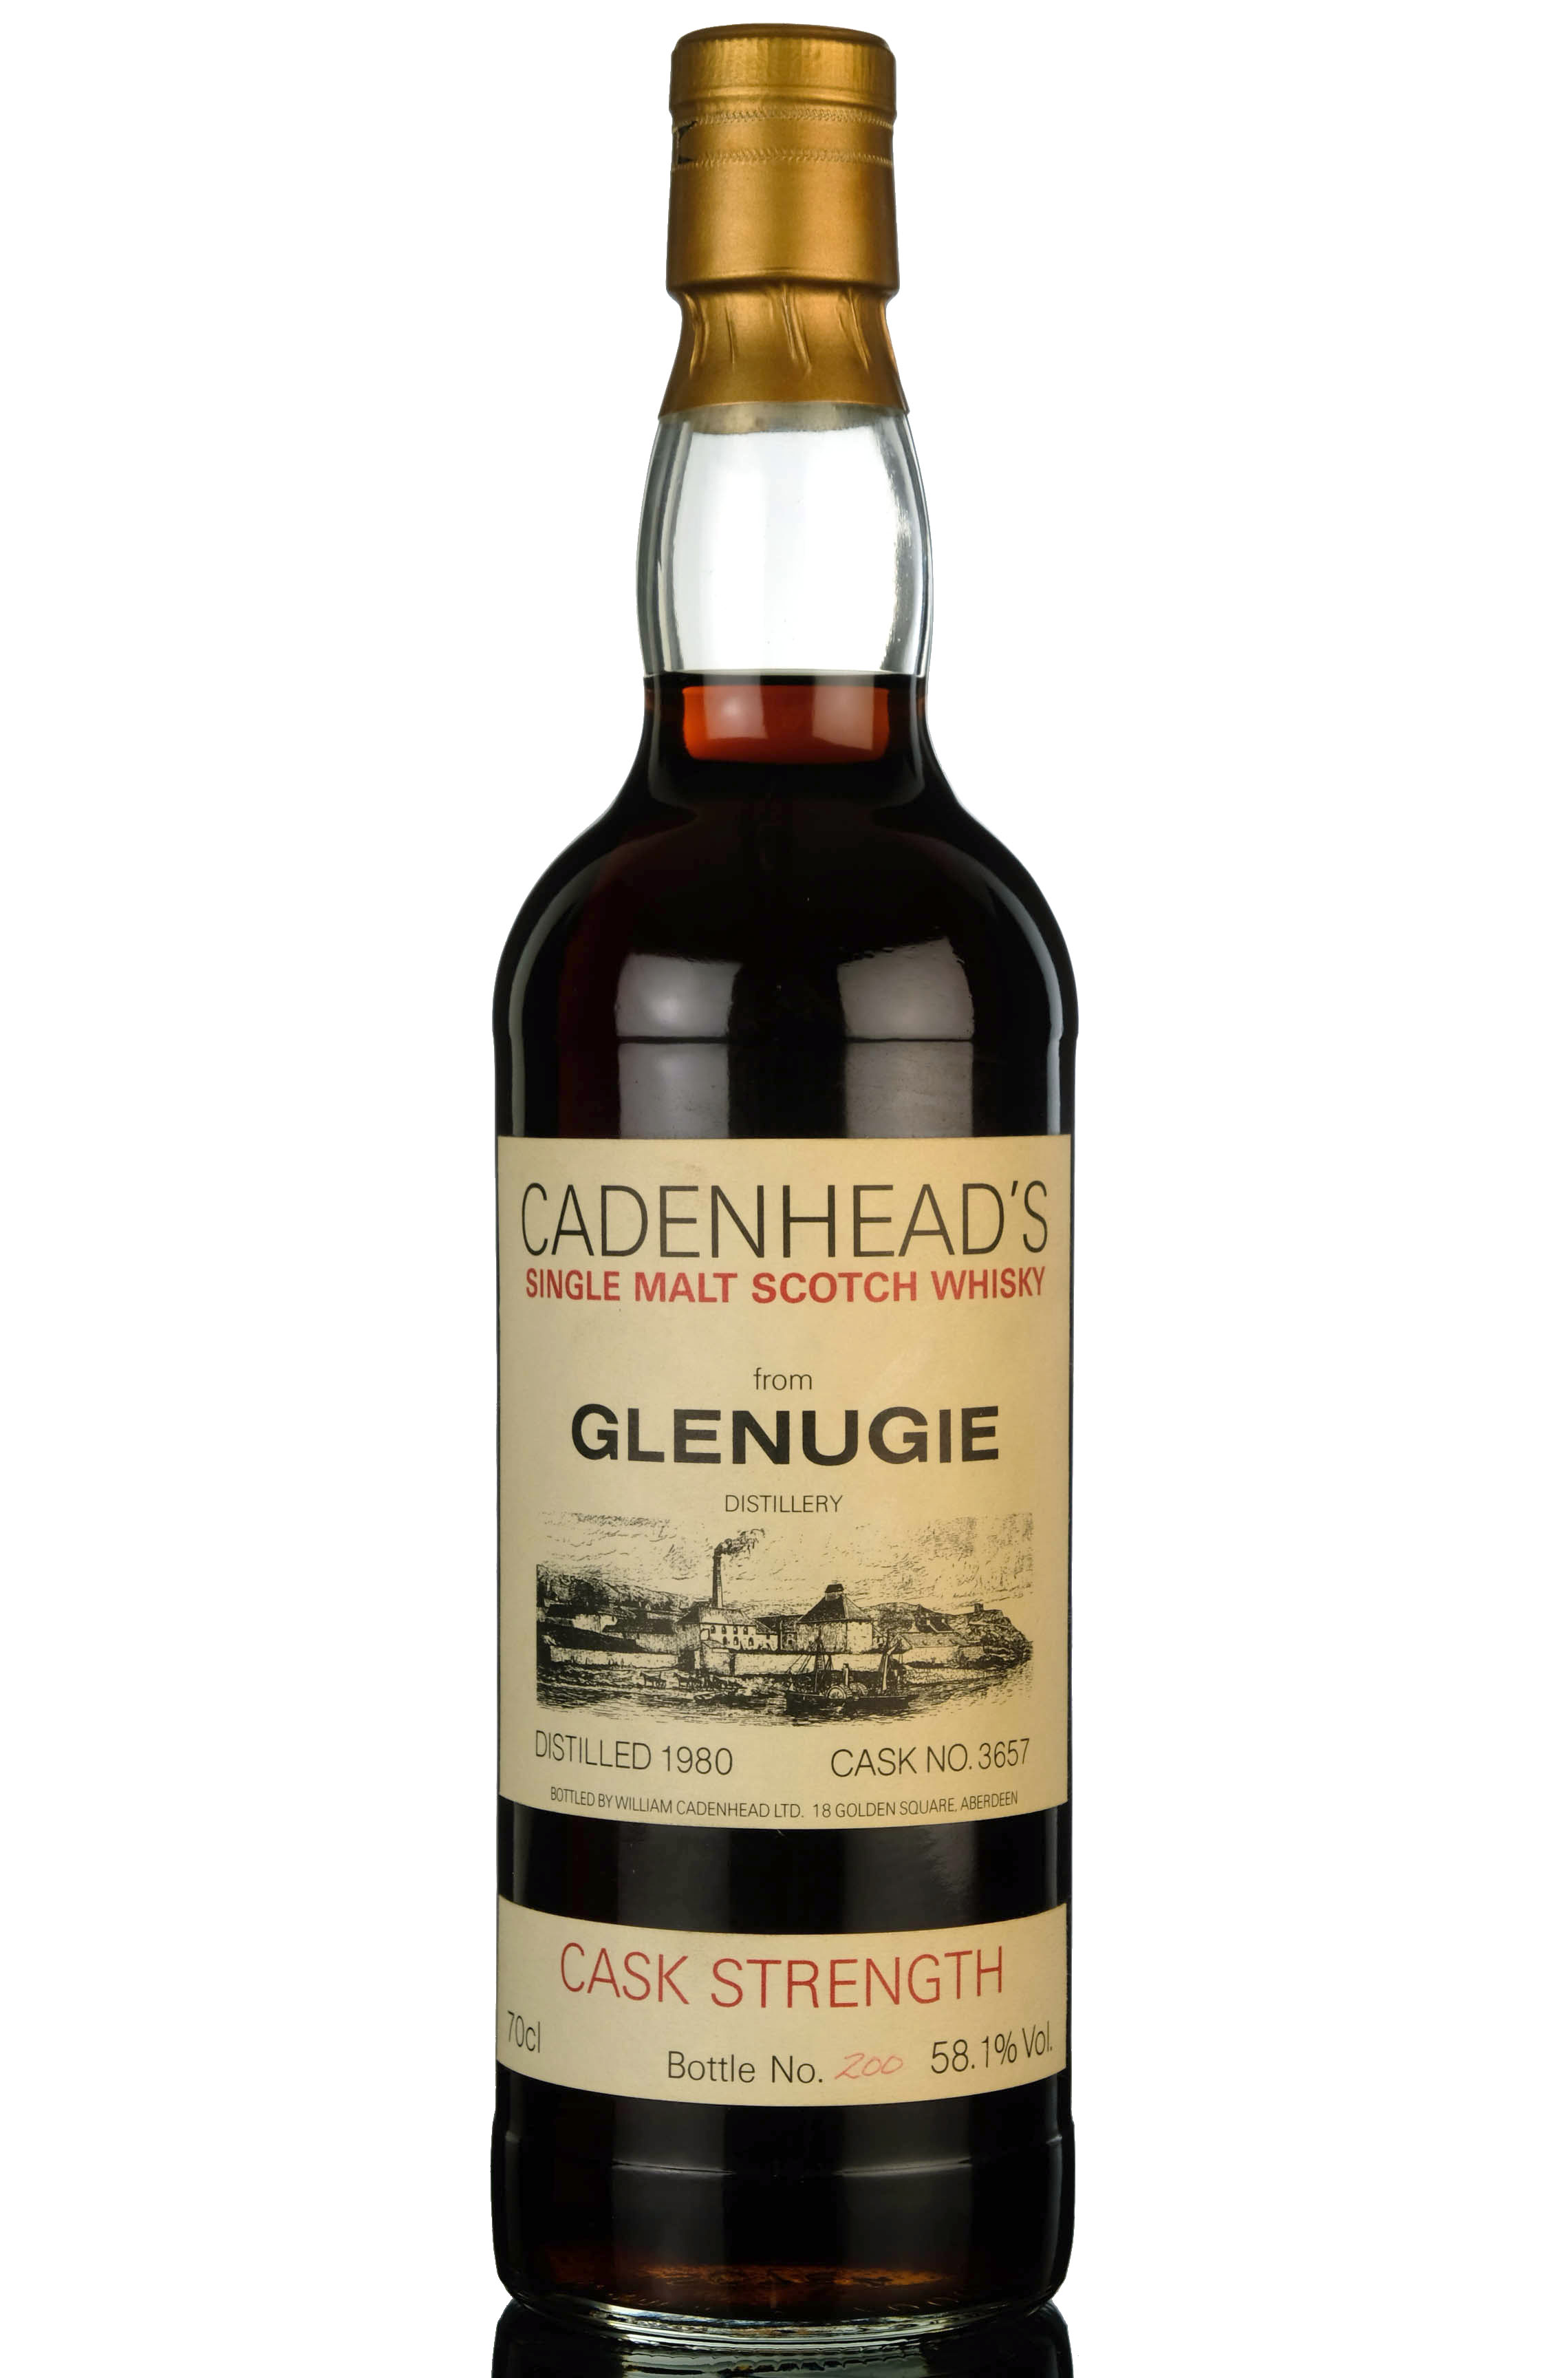 Glenugie 1980 - Cadenheads Cask Strength 3657